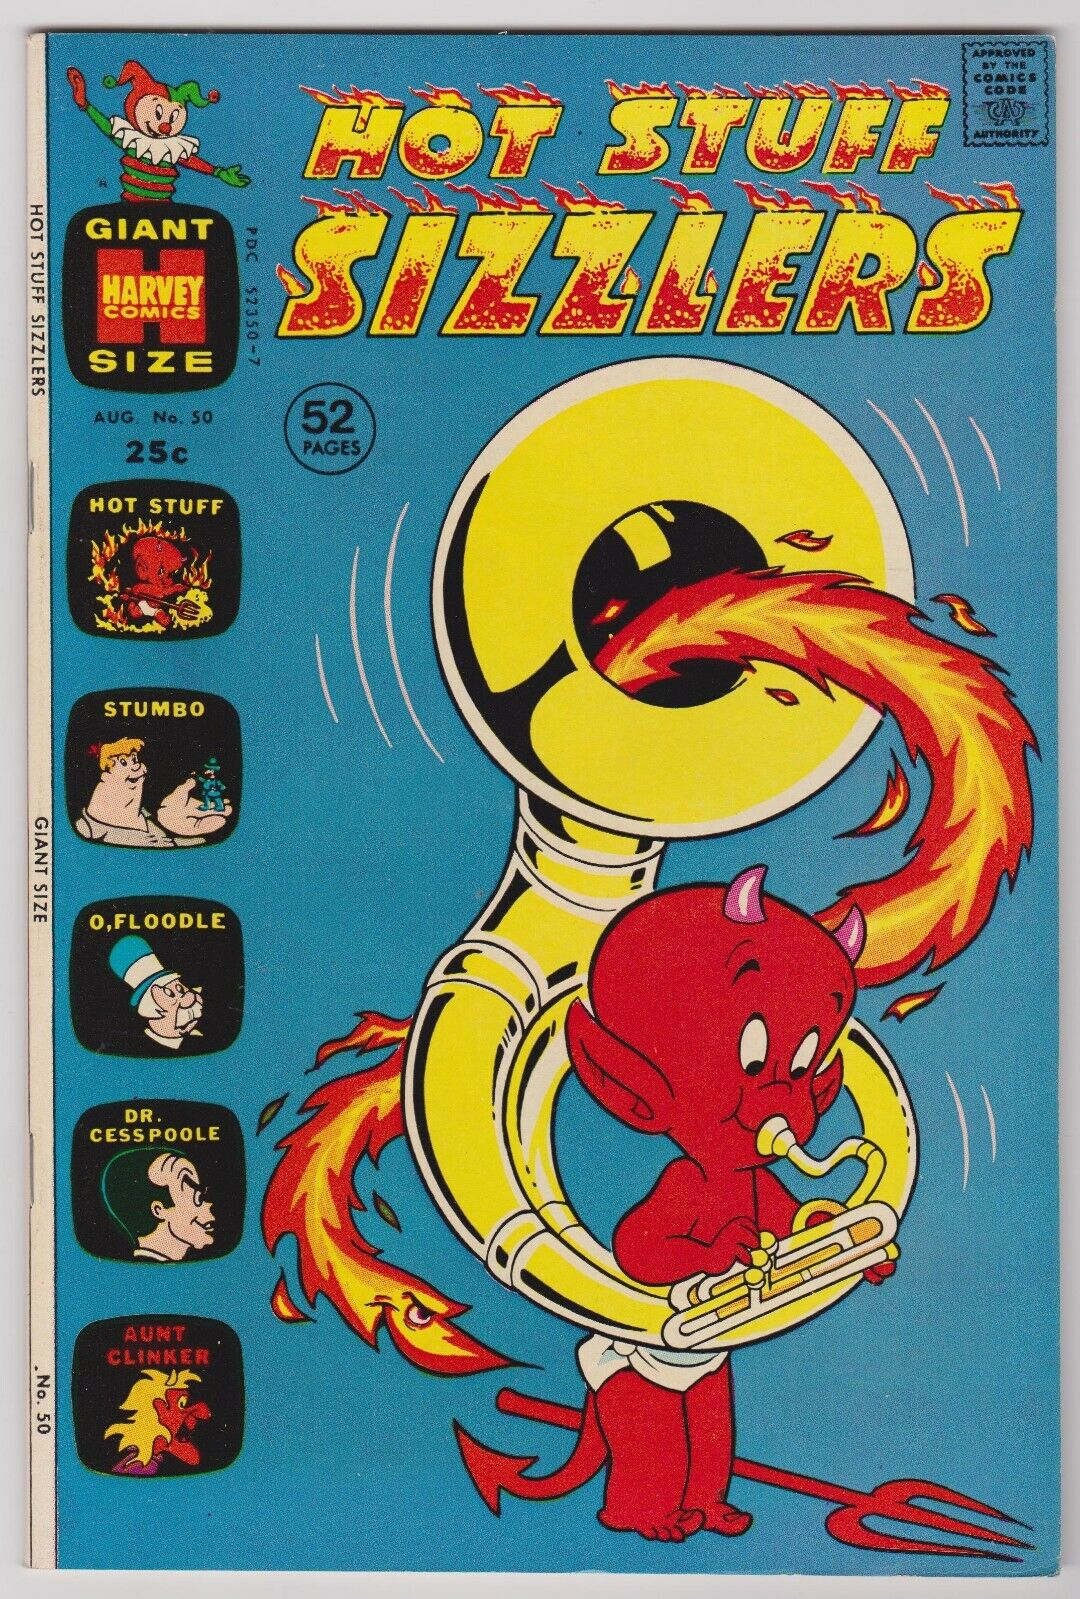 Hot Stuff Sizzlers #50  Harvey Giant  File Copy Comic  1972  VF